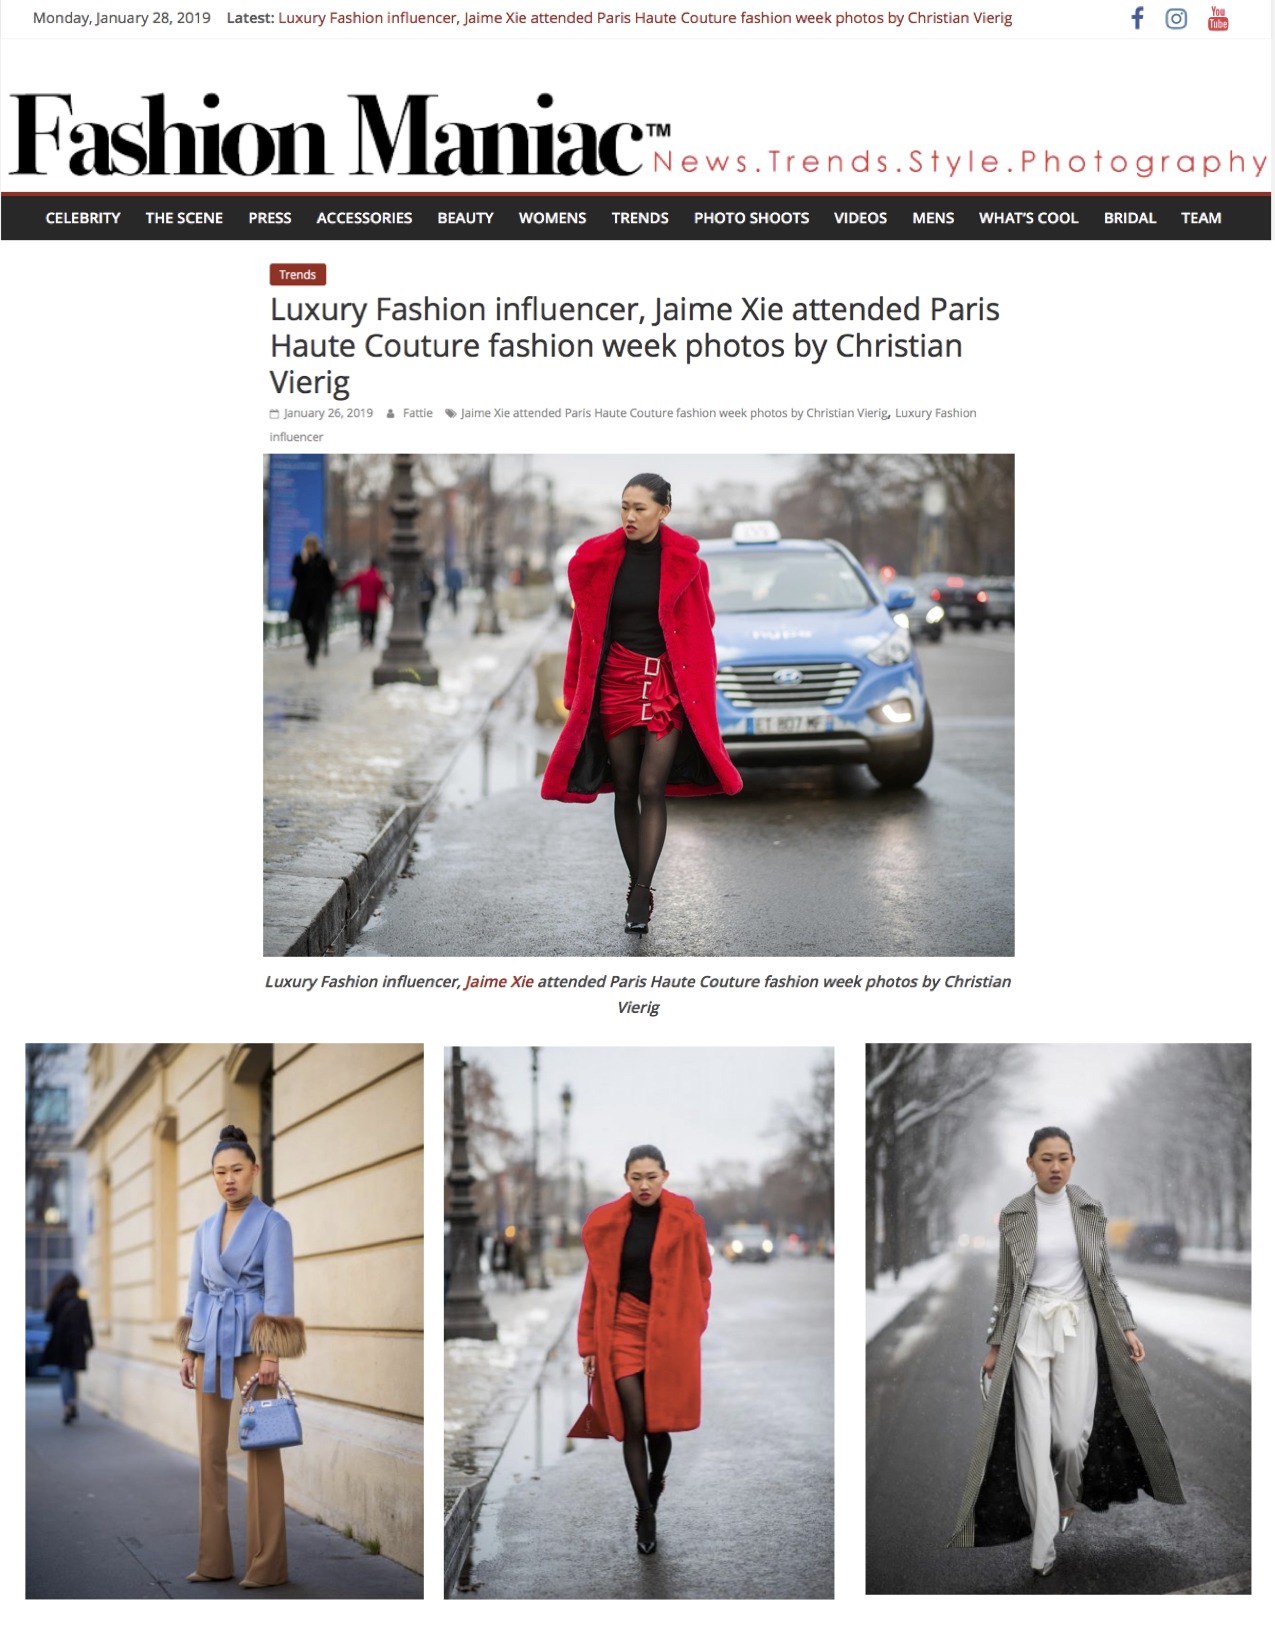 Fashion Maniac: Luxury Fashion influencer, Jaime Xie attended Paris Haute Couture Fashion Week